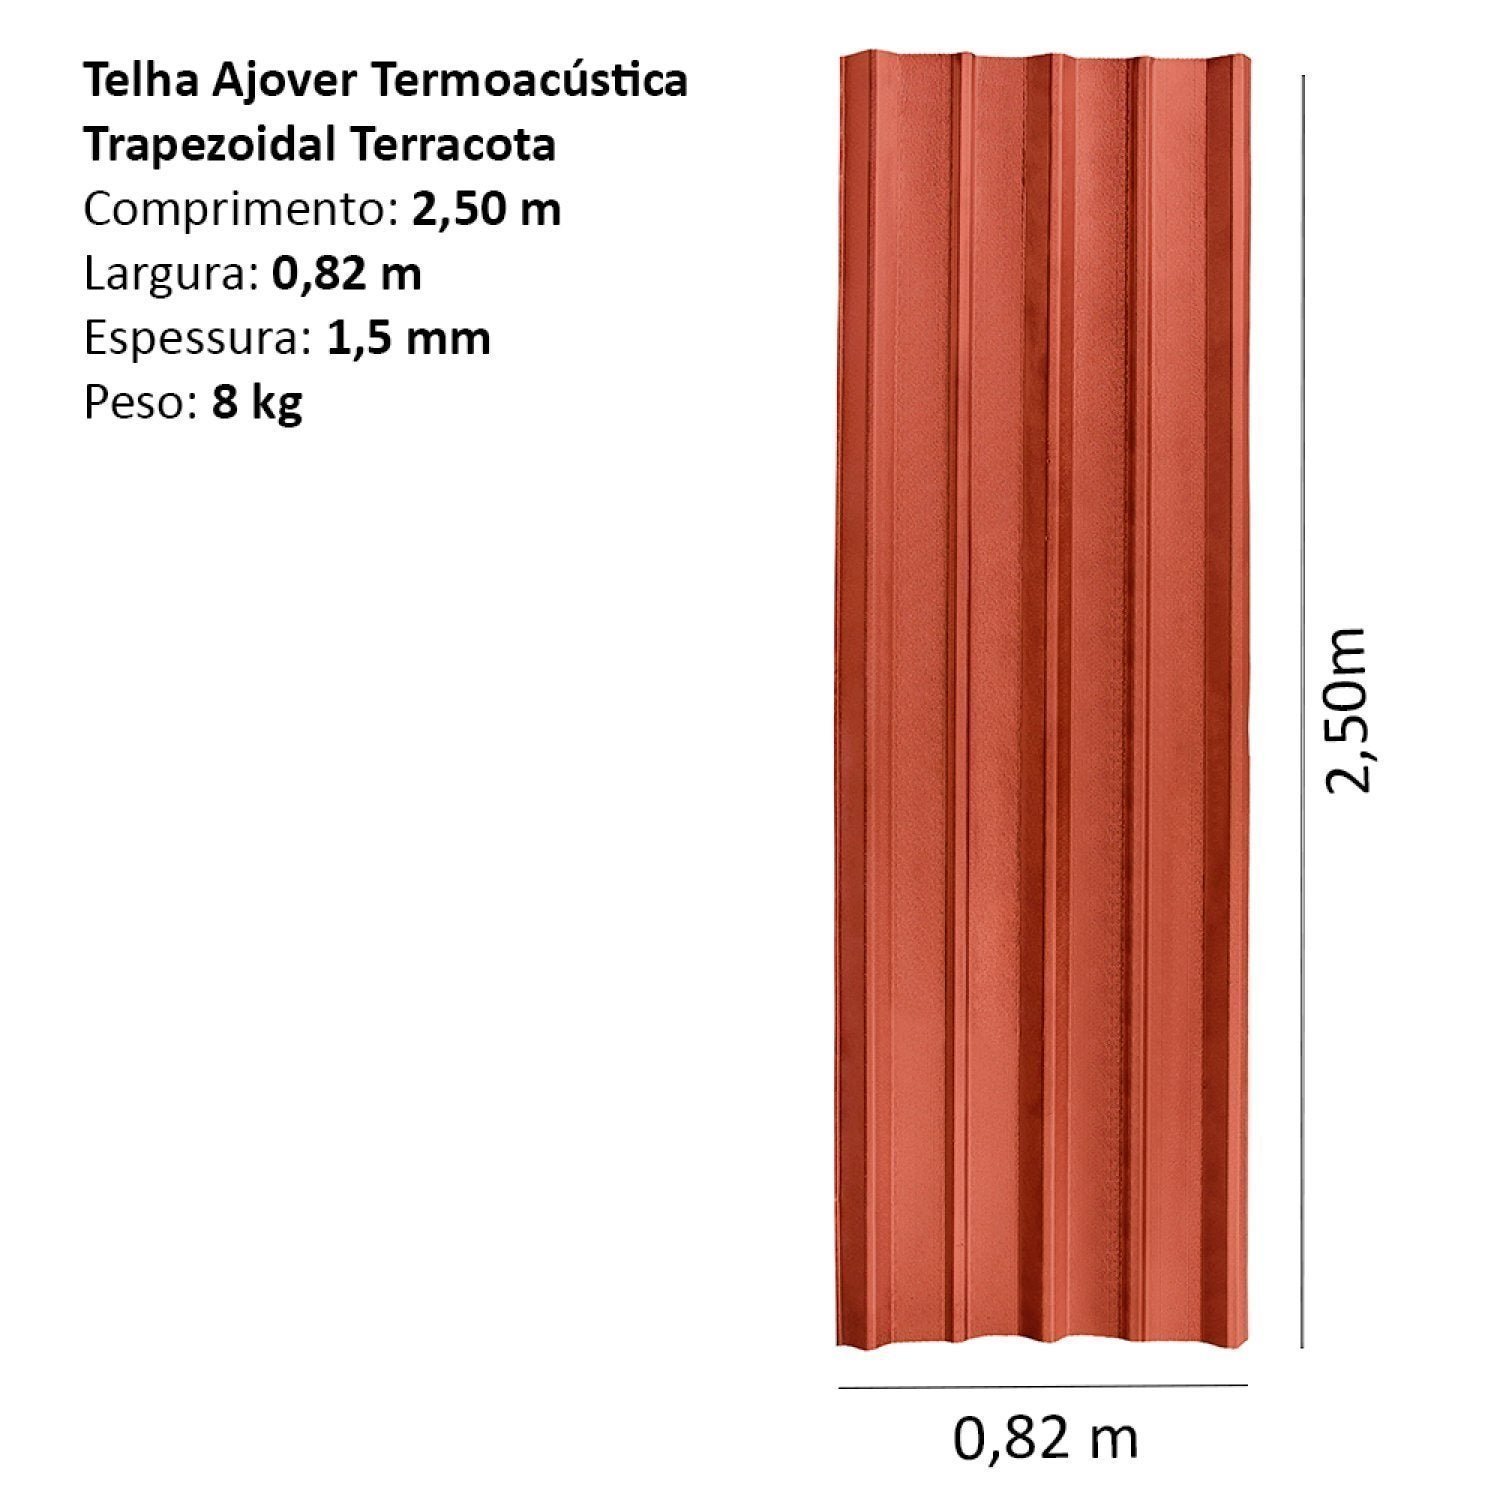 Telha Termoacústica Trapezoidal 2,5m x 0,82m Terracota Ajover - 4